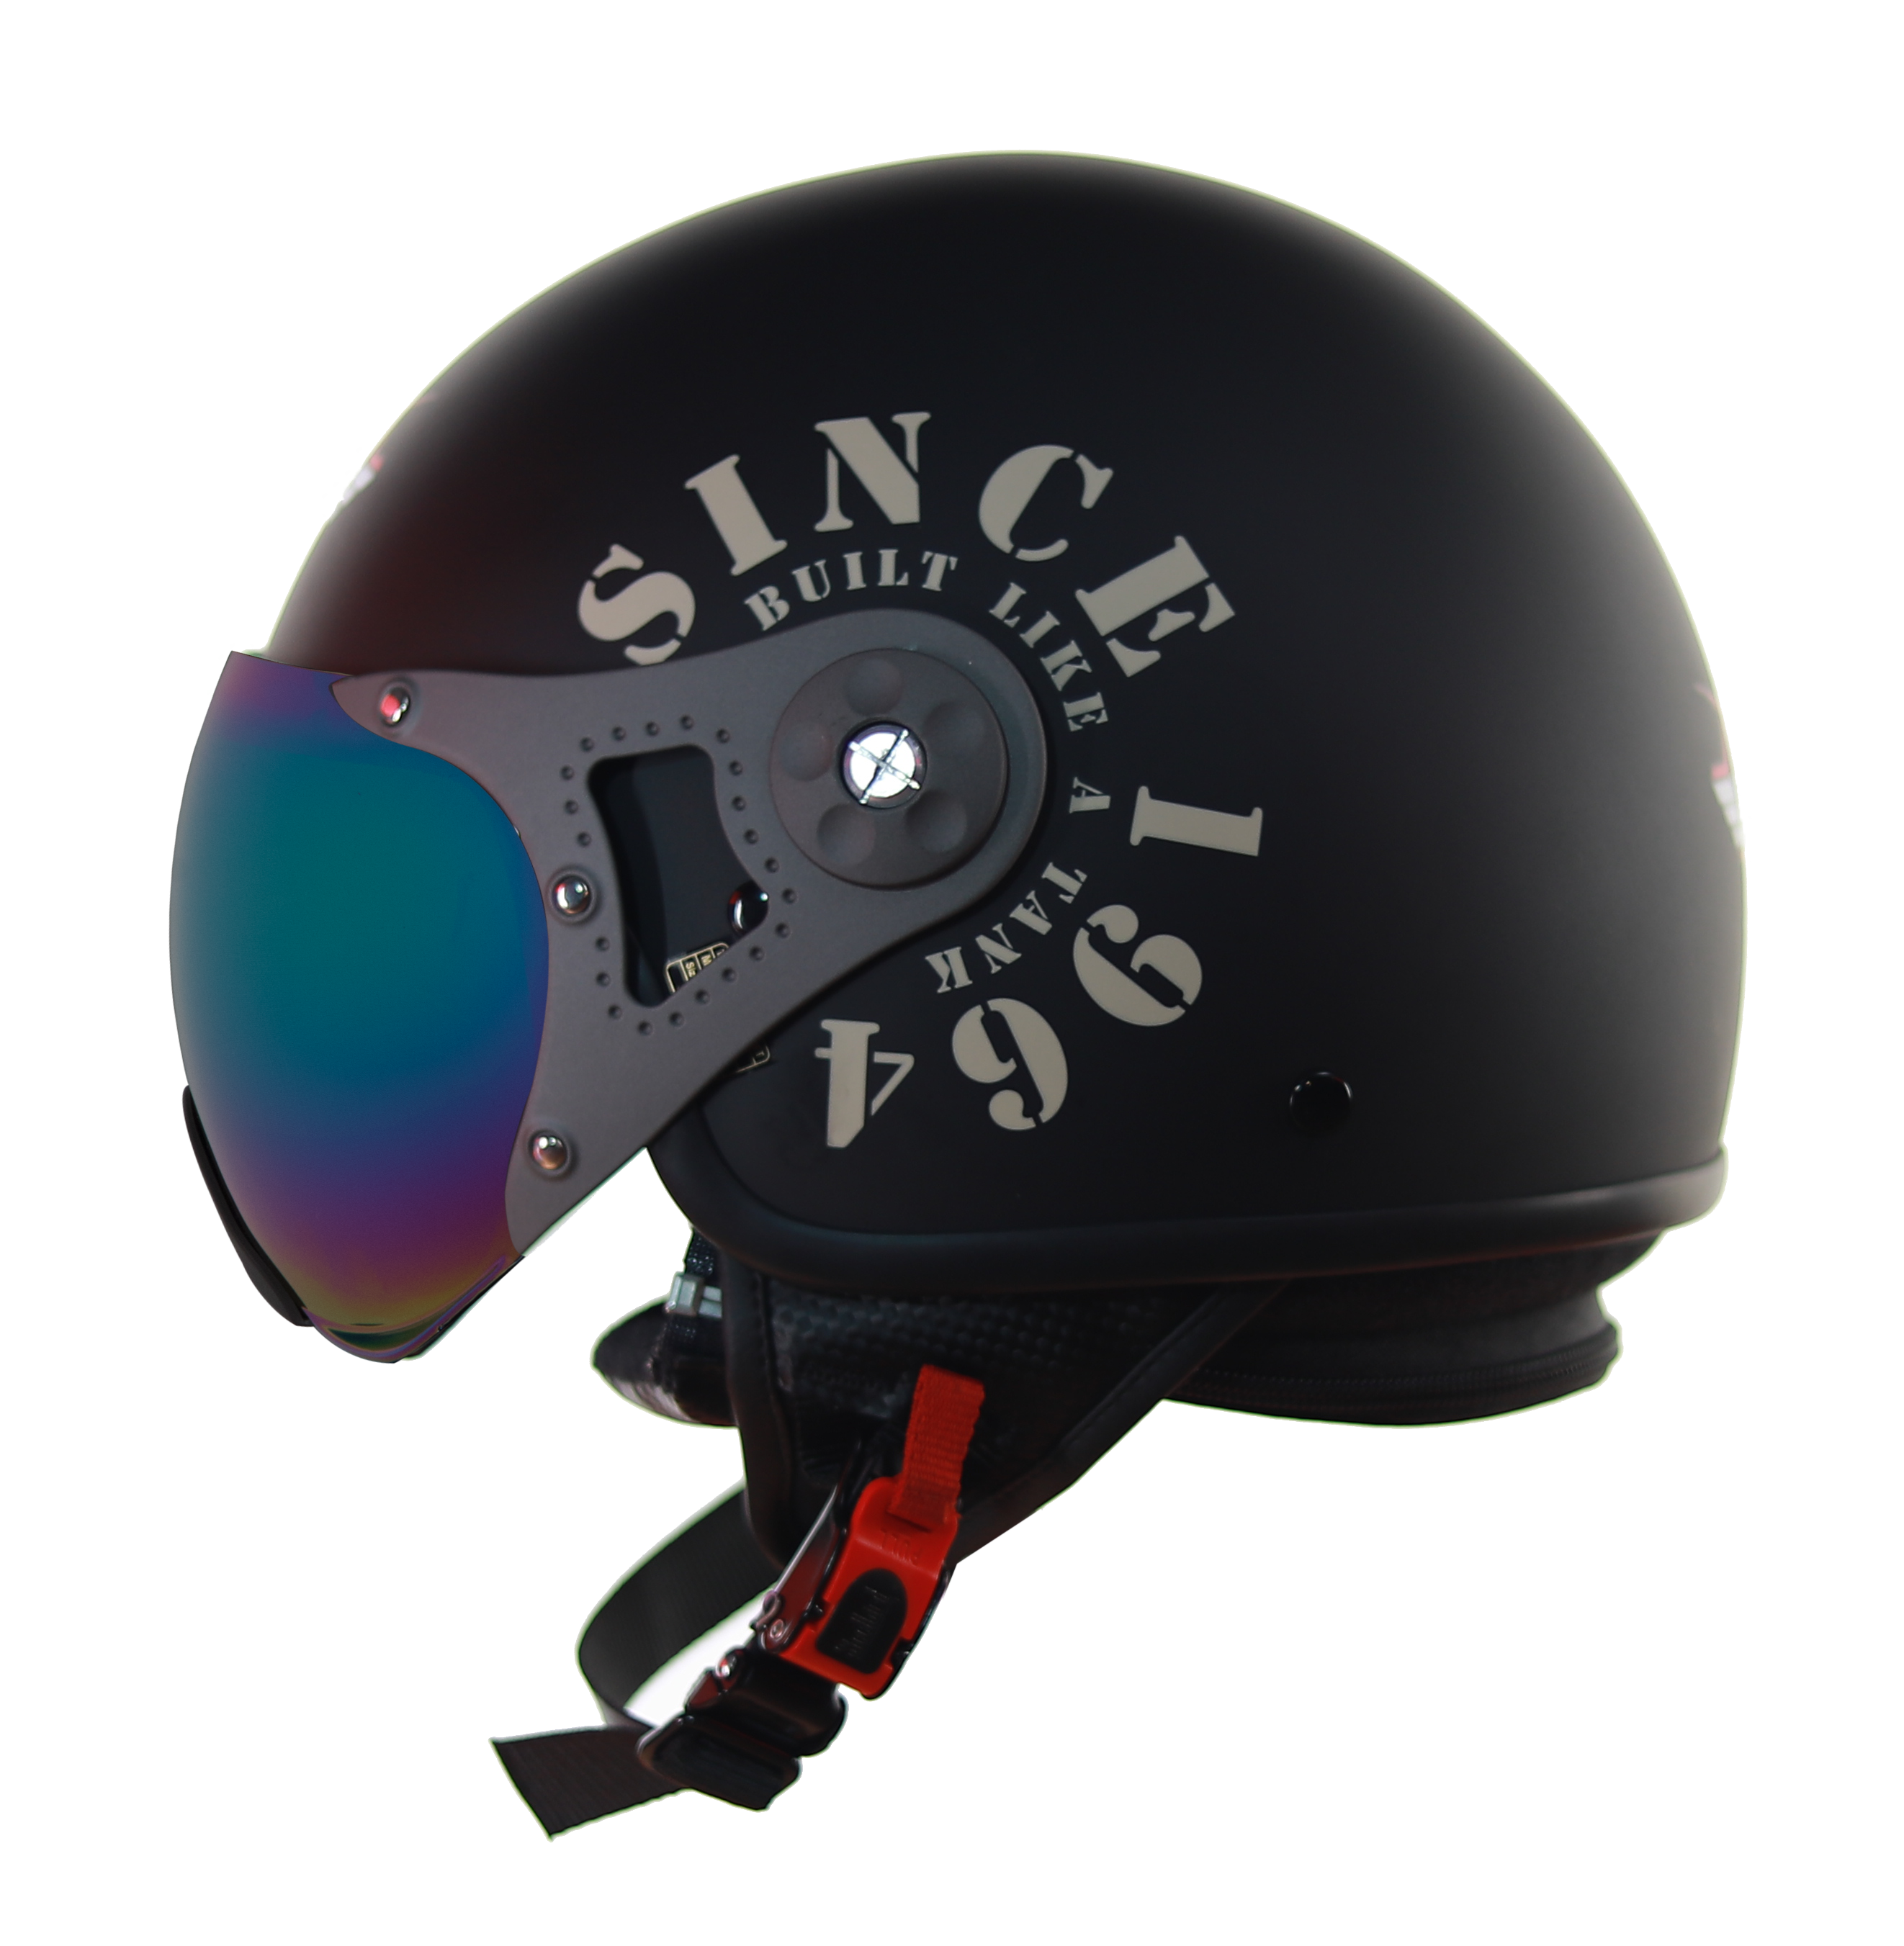 Steelbird SB-27 7Wings Tank Open Face Graphic Helmet (Matt Black Desert Storm With Chrome Rainbow Visor)